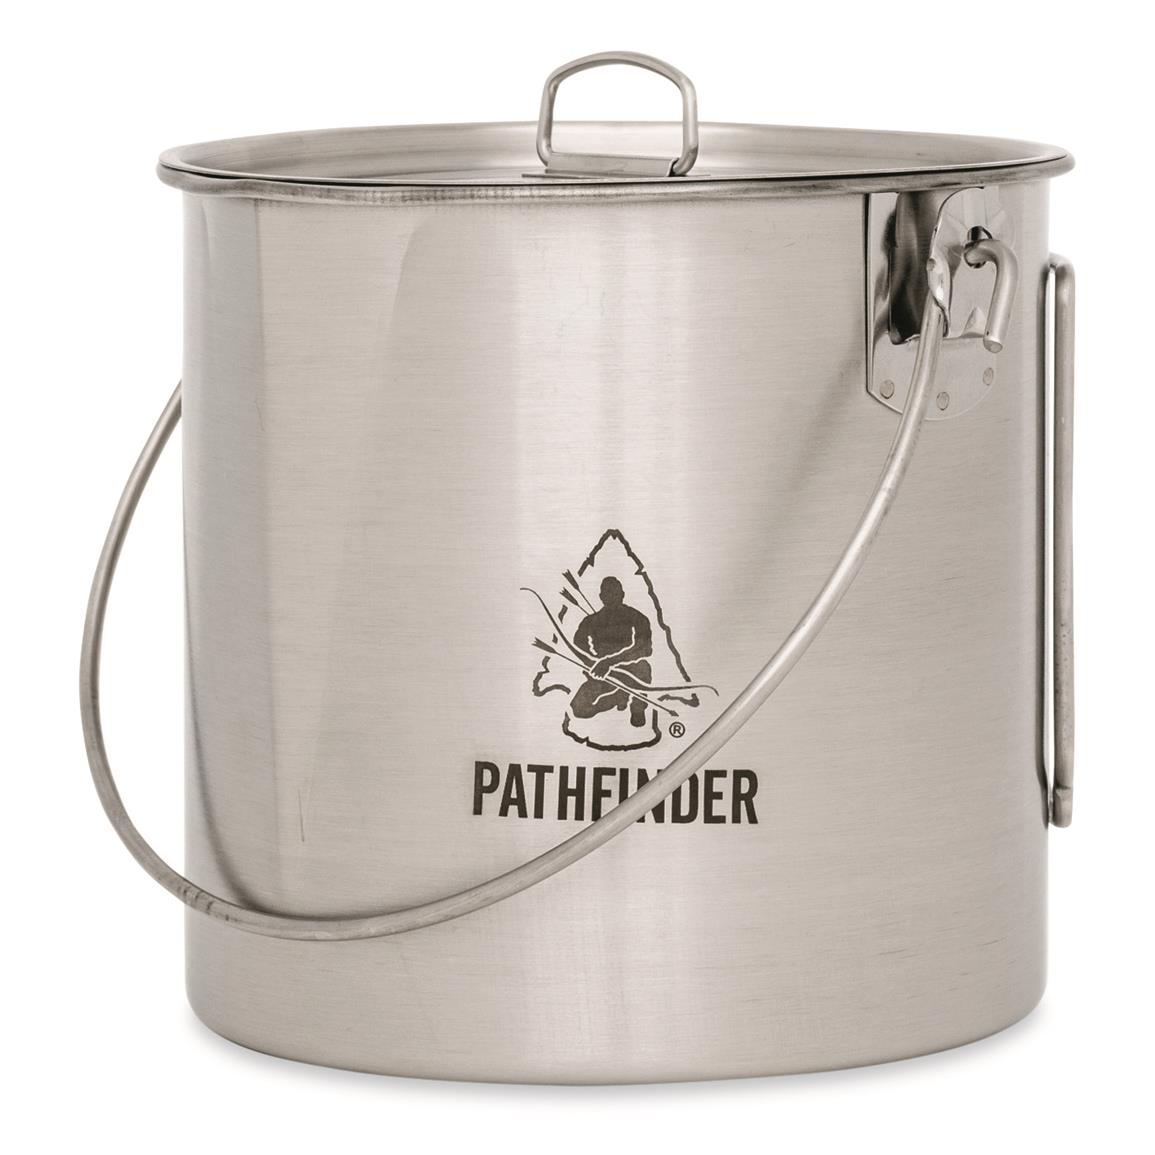 Pathfinder Stainless Steel Bush Pot, 64 oz.